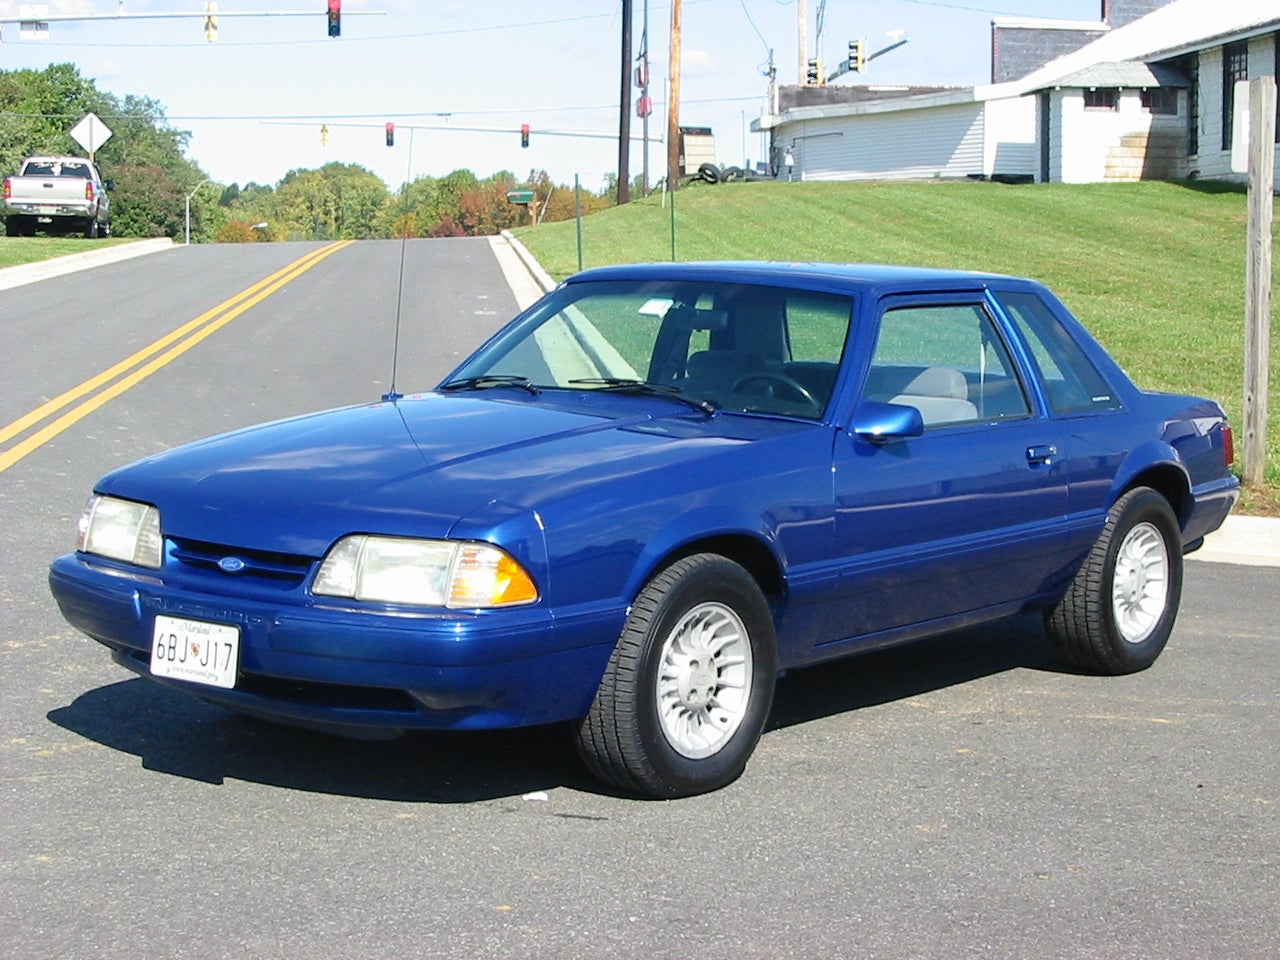 Купить форд 1990. Ford Mustang 1990. Ford 1990. Форд Мустанг купе 1990. Форд Мустанг 1990 года.